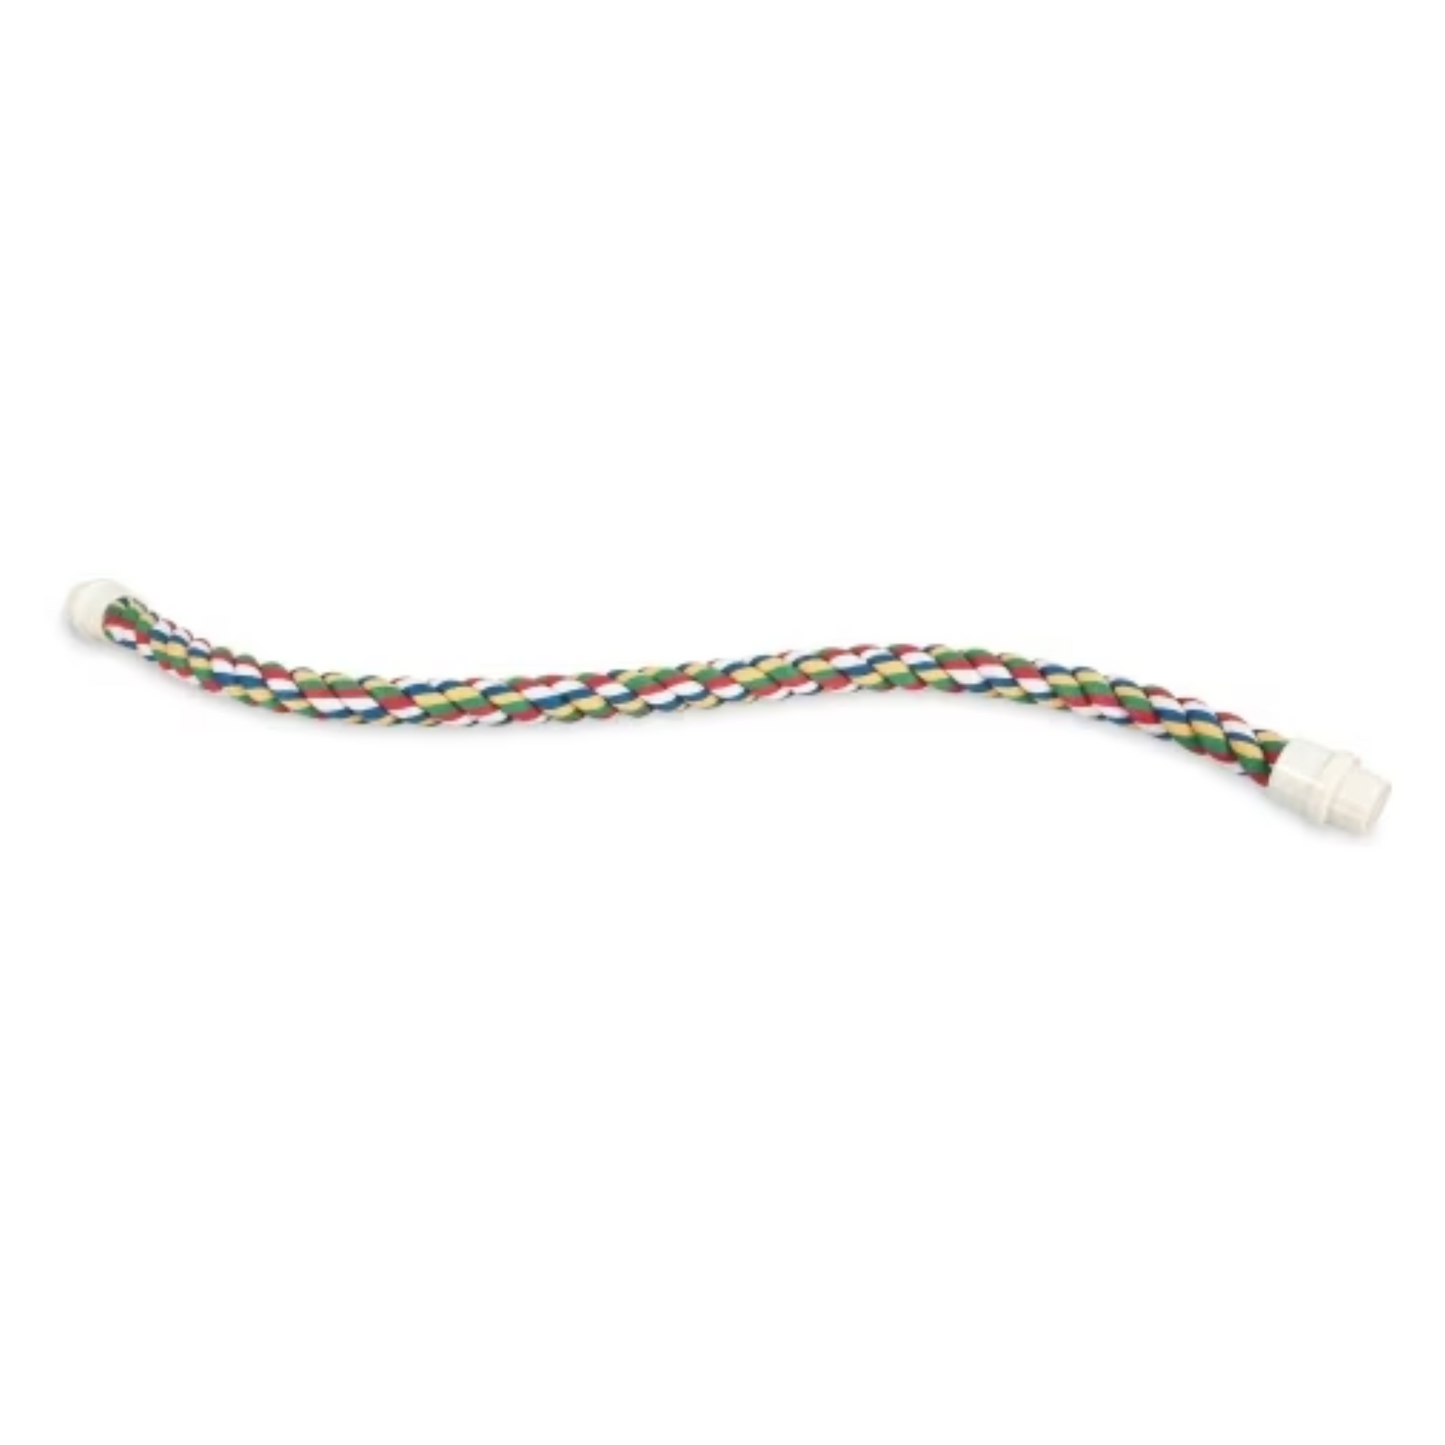 JW Pet Flexible Multi-Color Comfy Rope Perch 32"